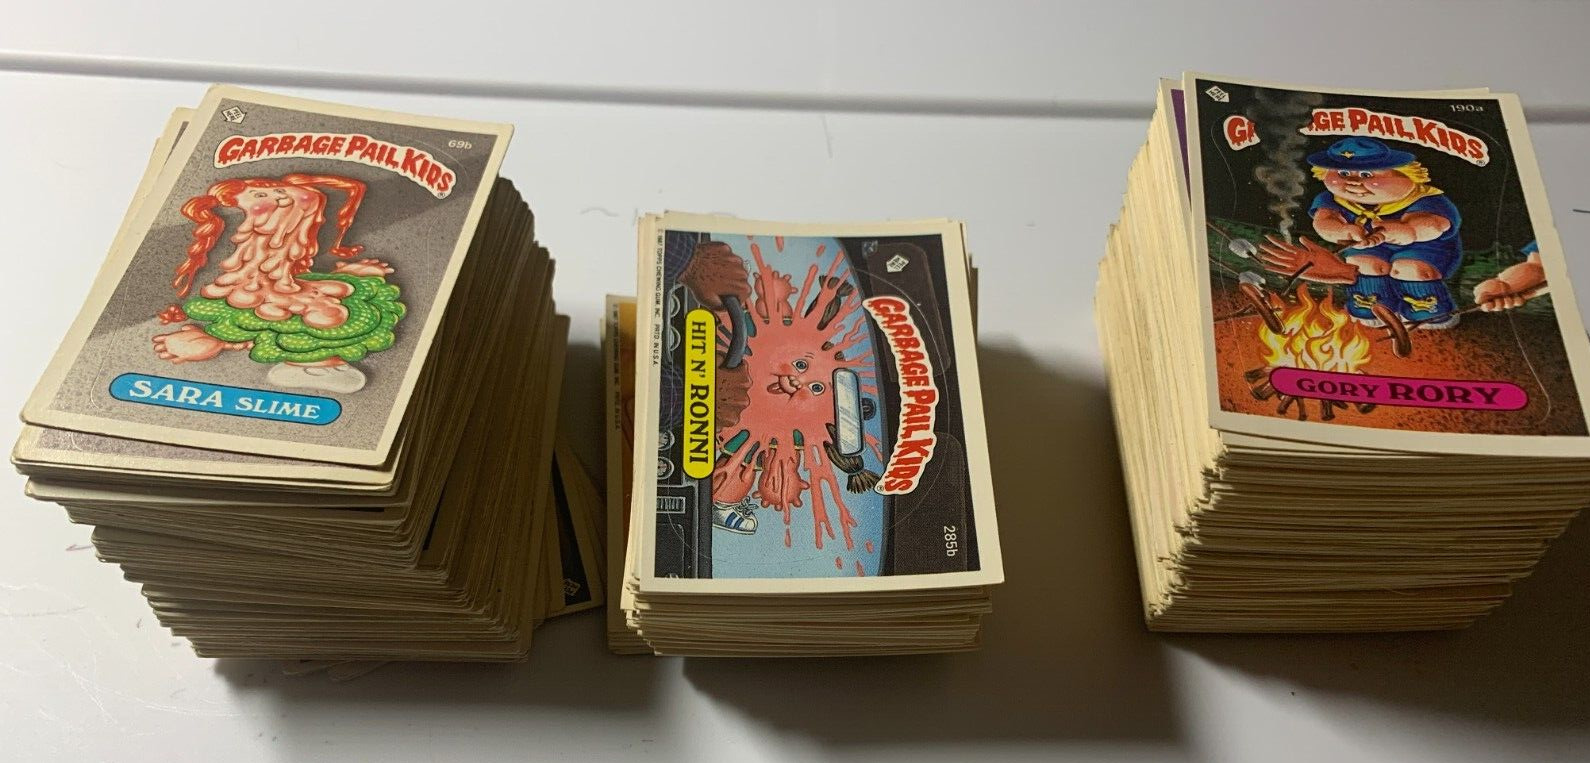 1986-1987 Garbage Pail Kids Lot of 6 Random Sticker Cards. See Desc. for Details